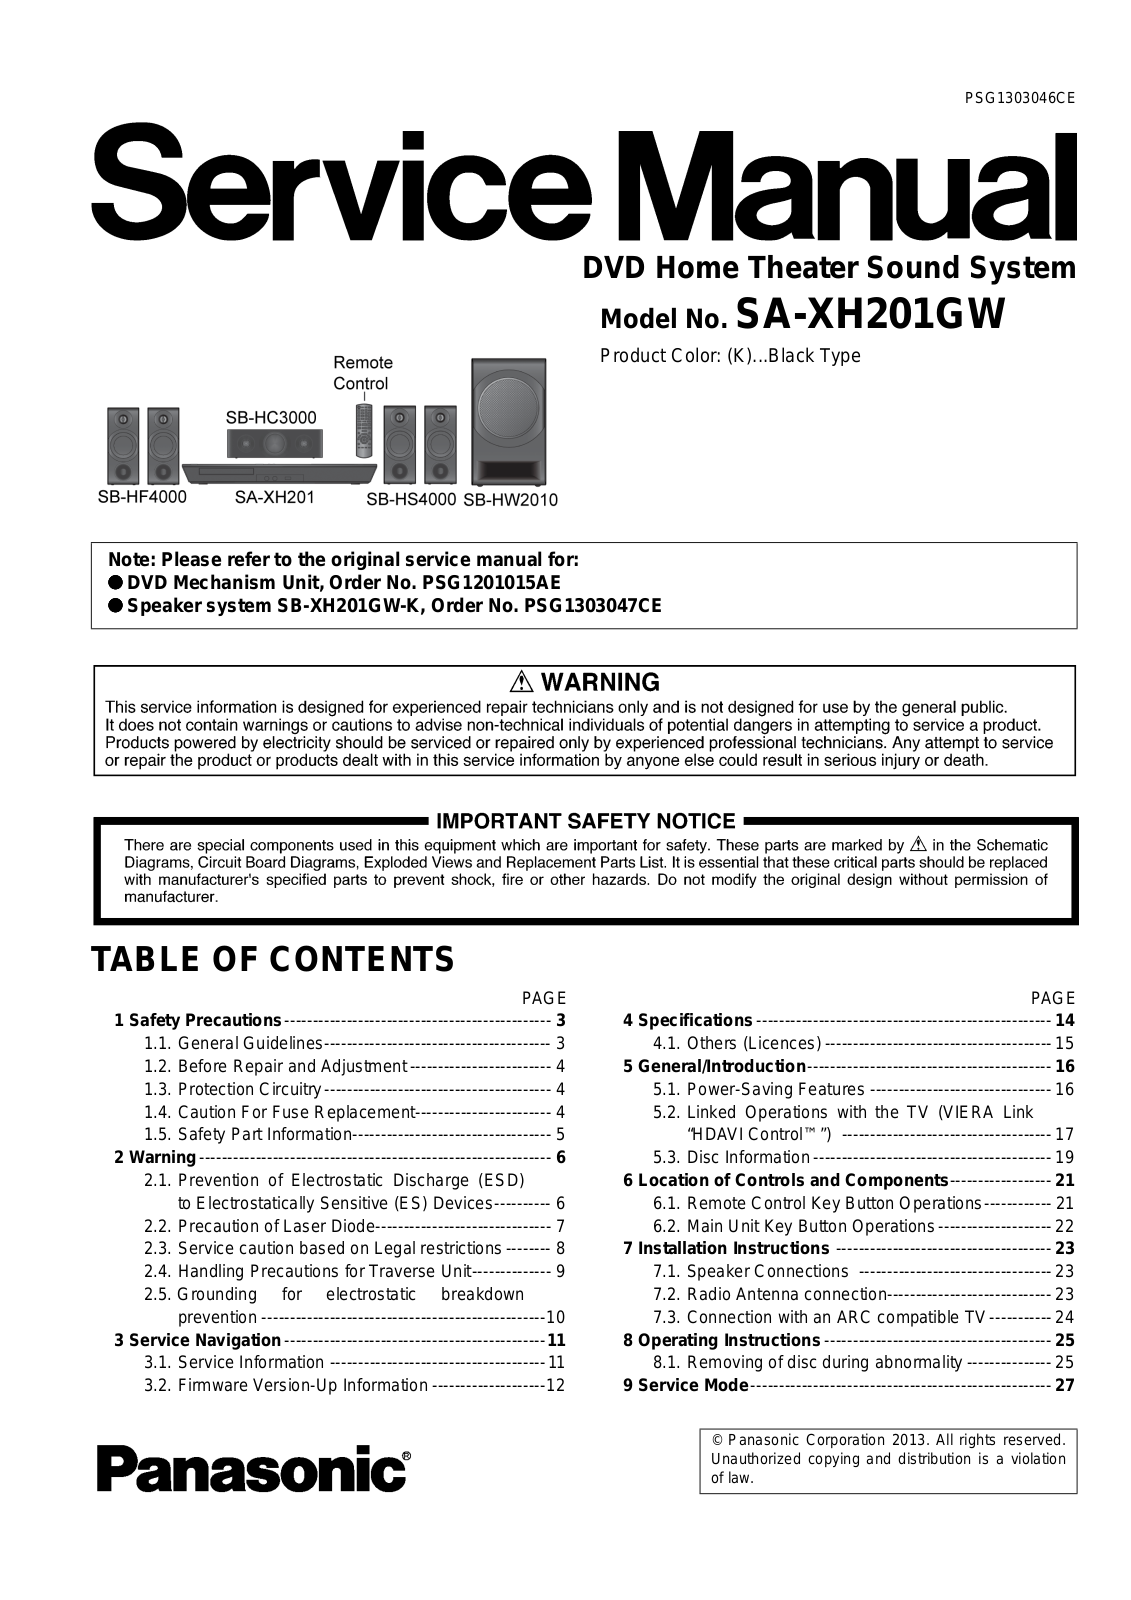 Panasonic SA-XH201GW Service manual